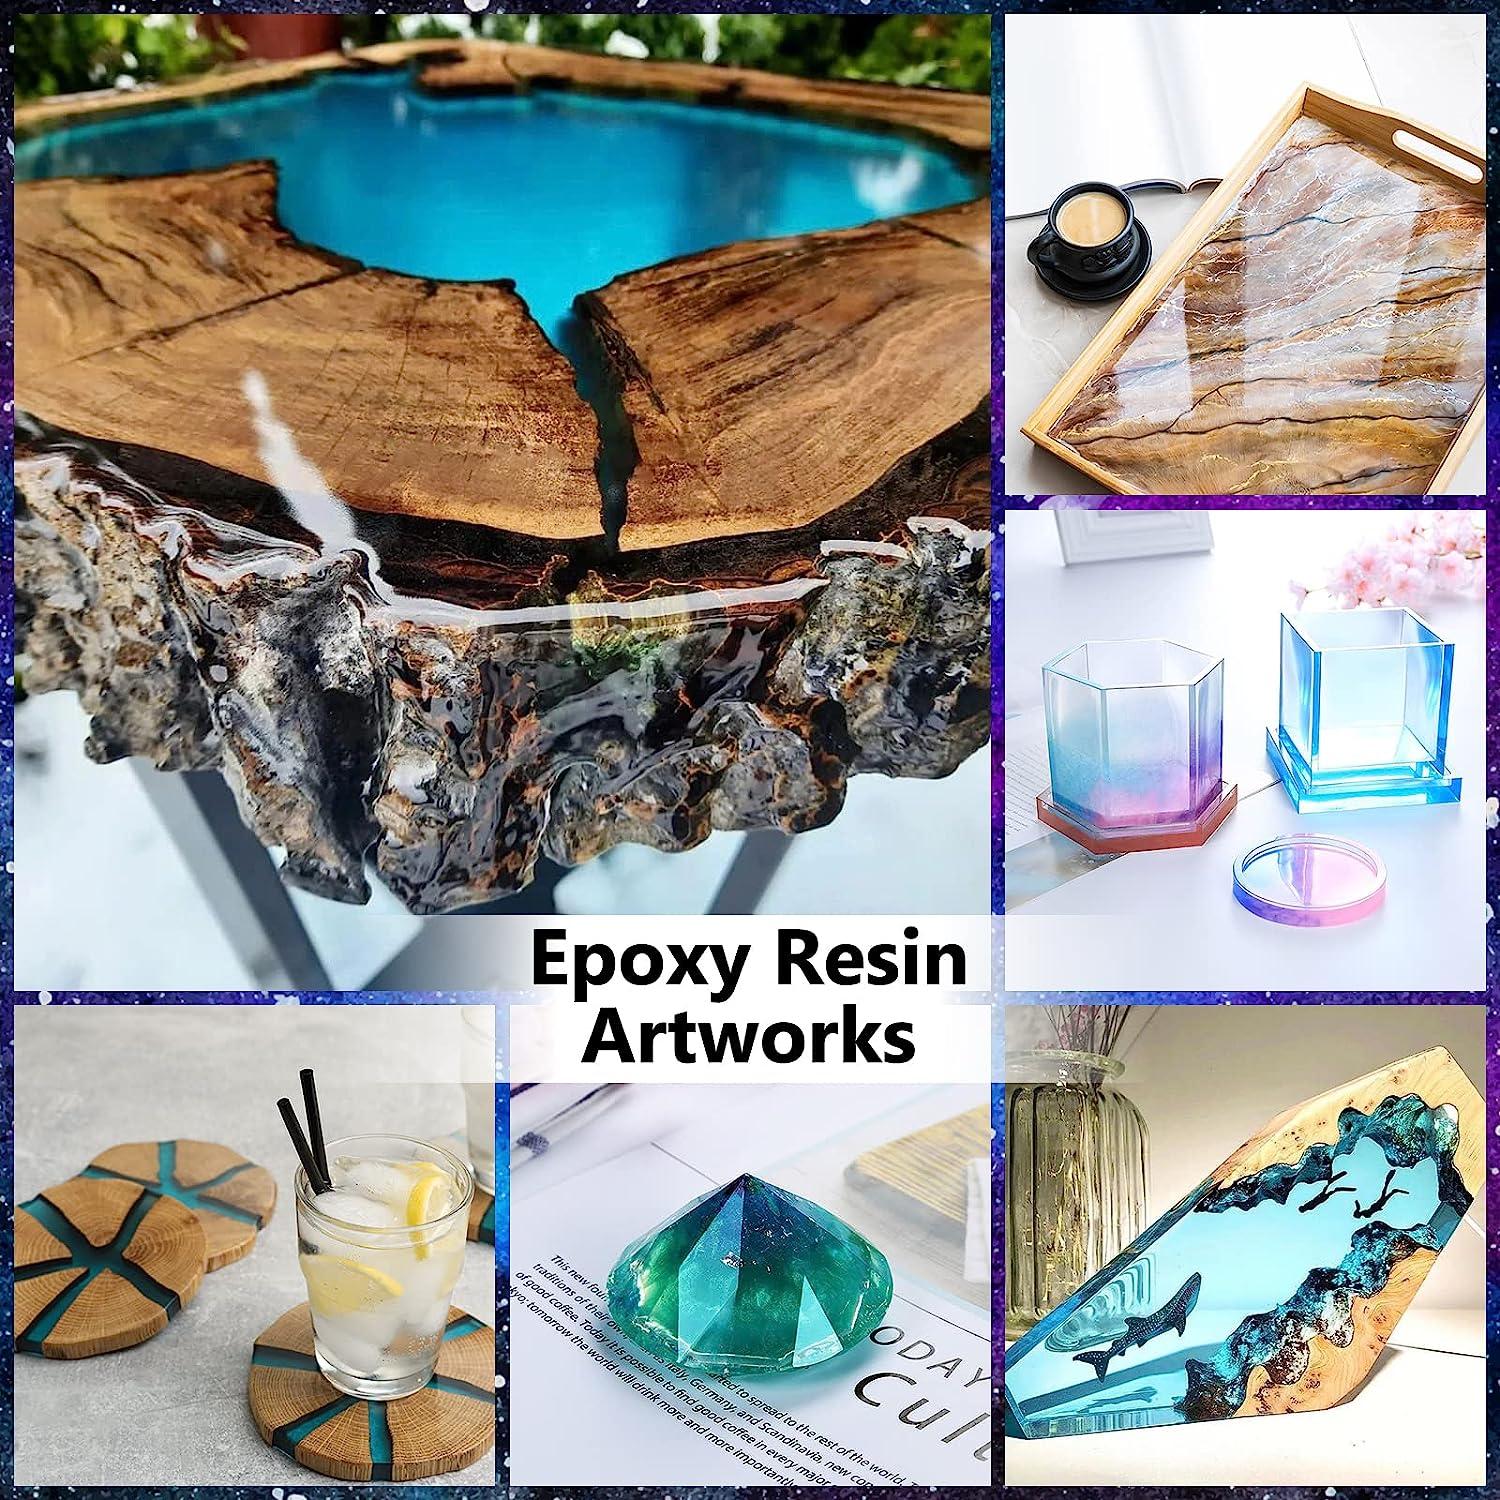 Epoxy Resin Kit - 64 oz